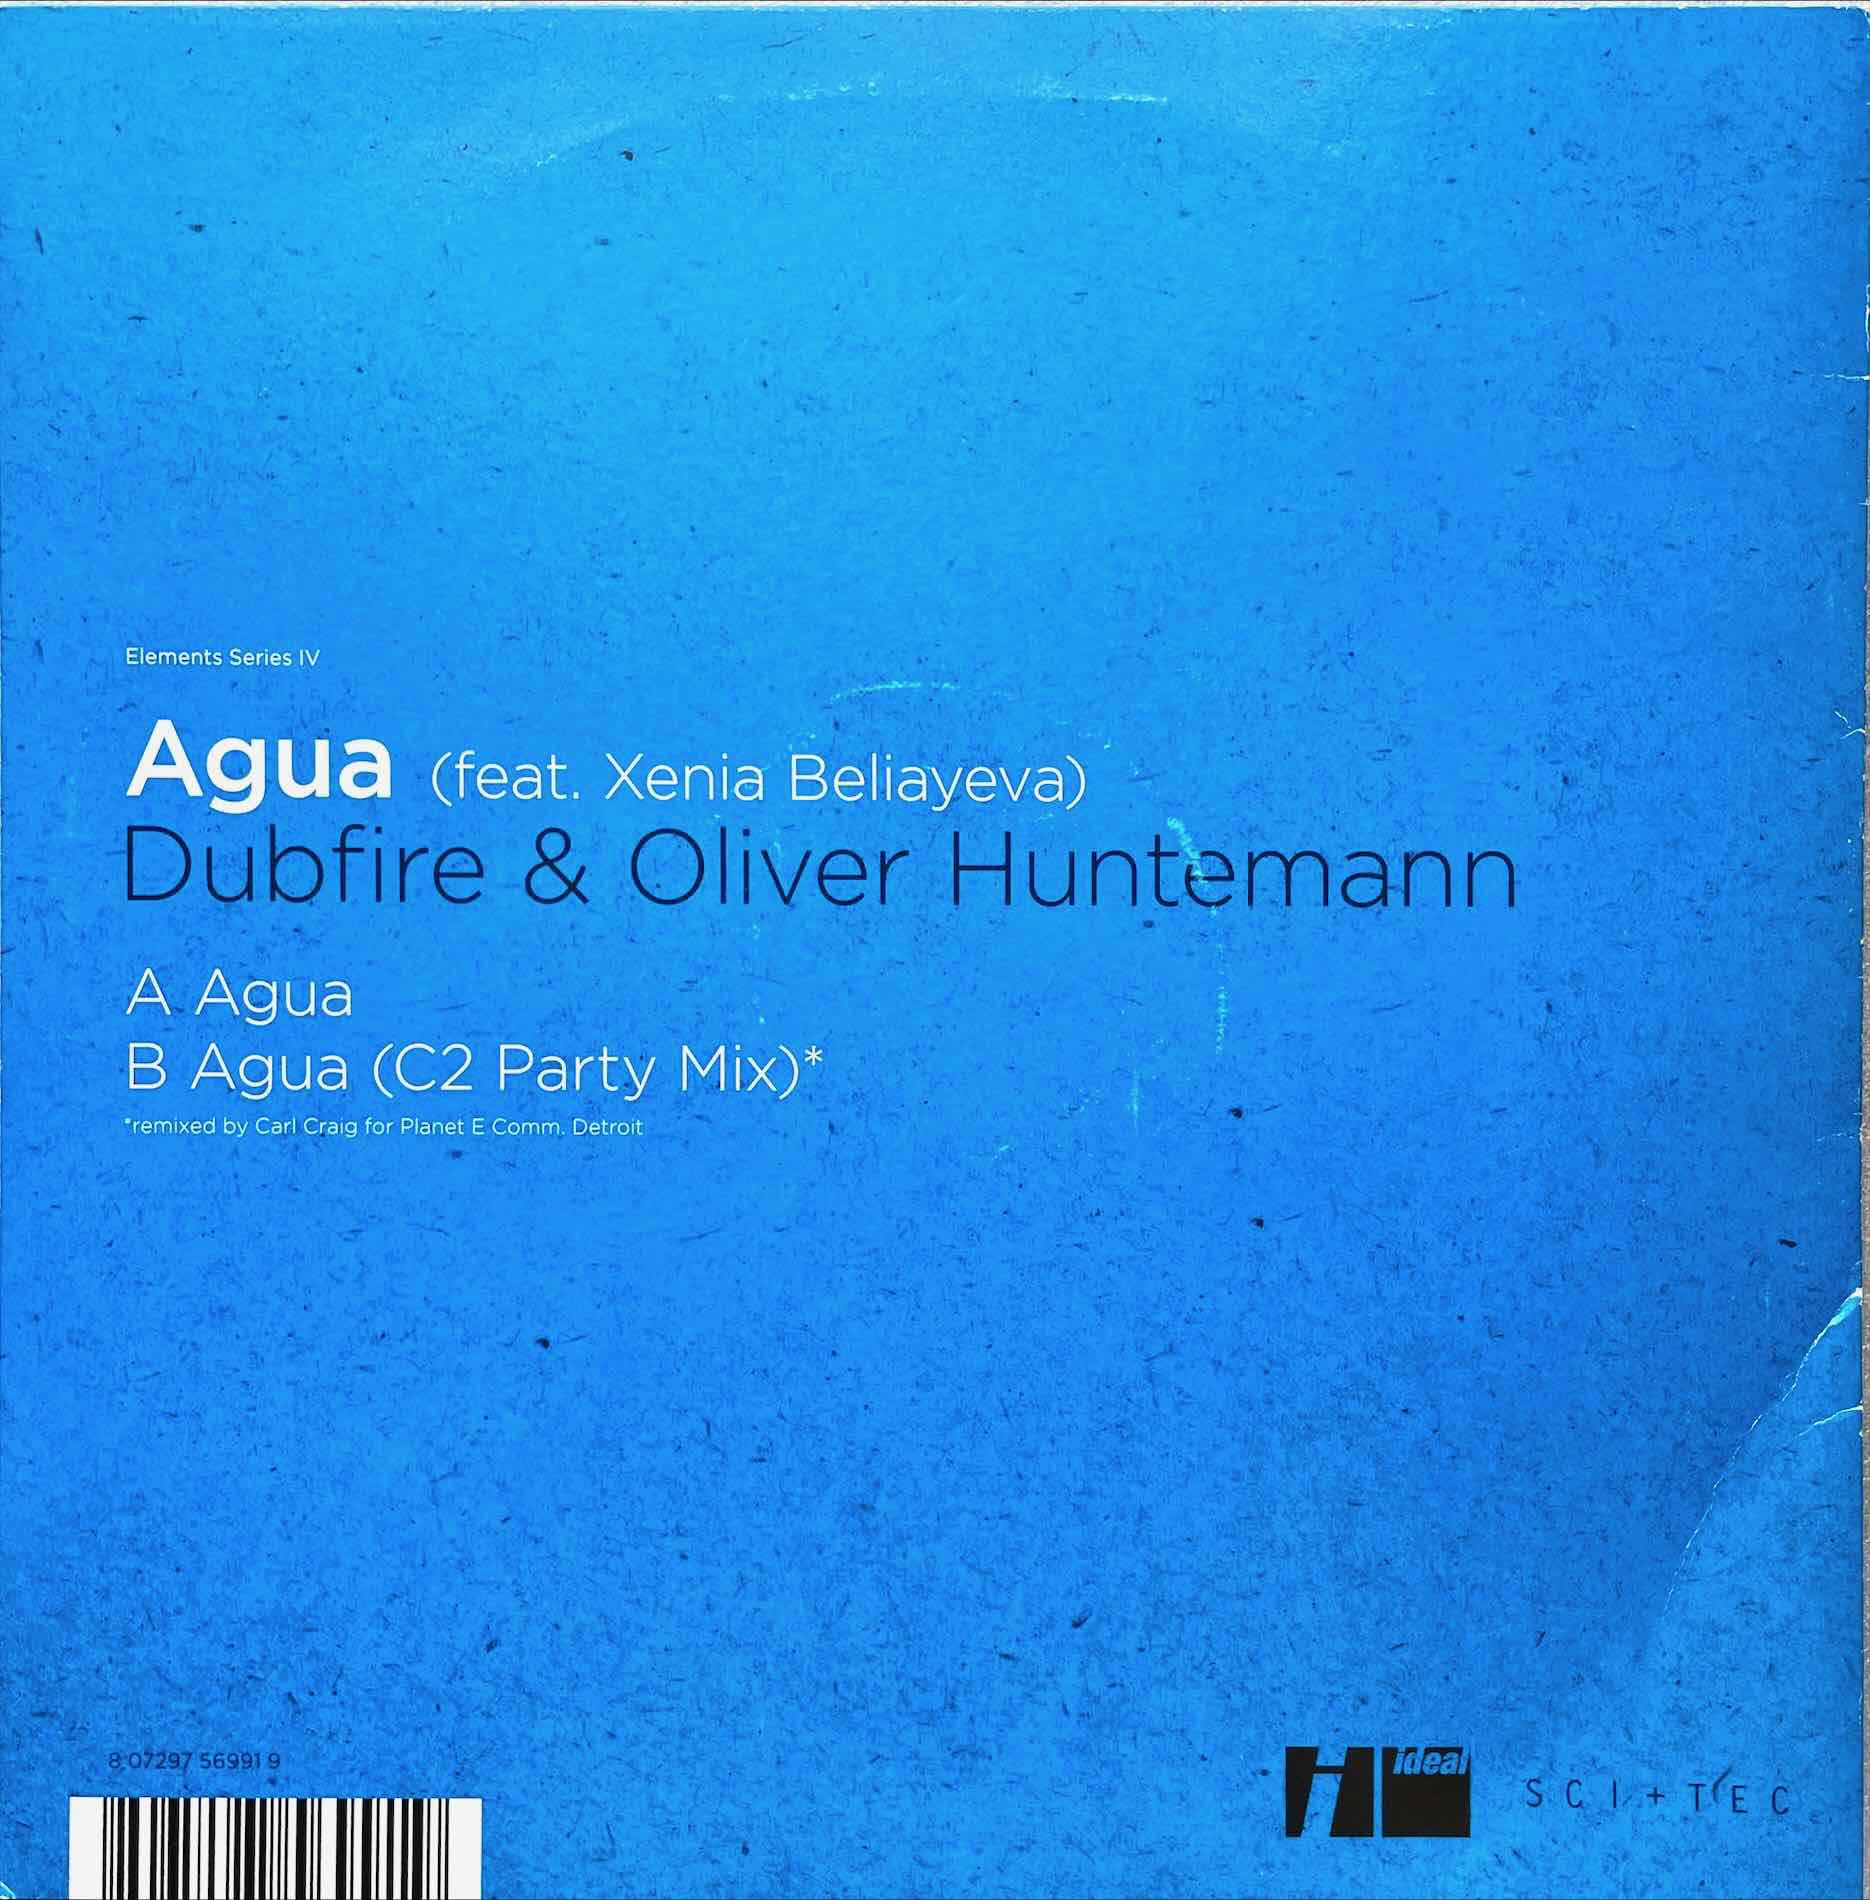 Dubfire & Oliver Huntemann Feat. Xenia Beliayeva – Agua 12 inch single sleeve image back